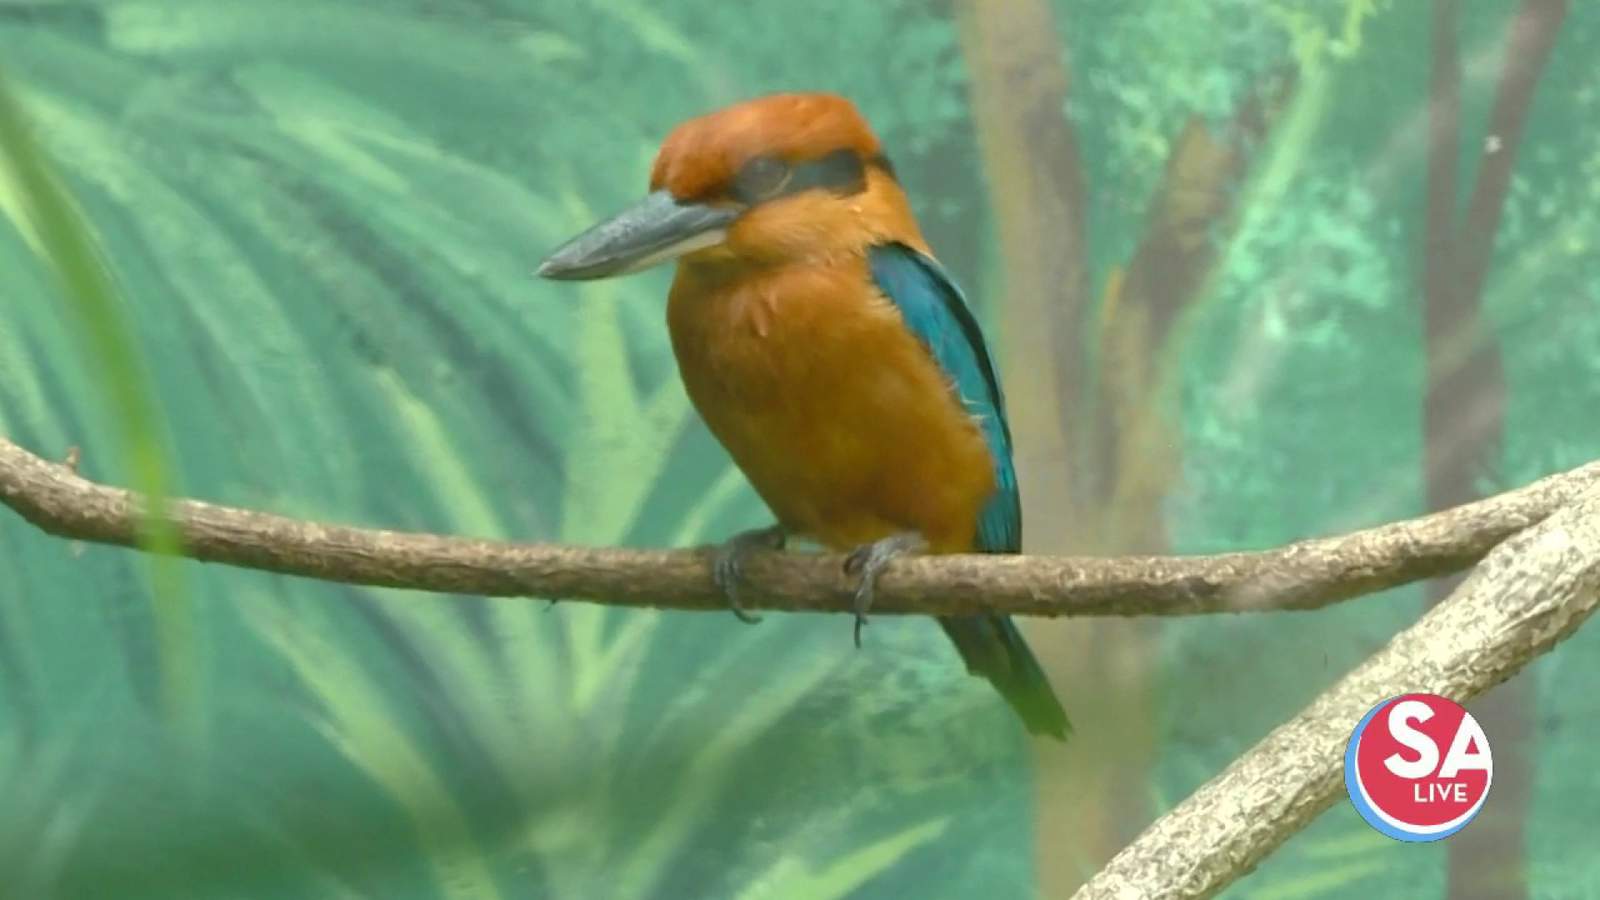 Bird extinct in the wild, born at San Antonio Zoo